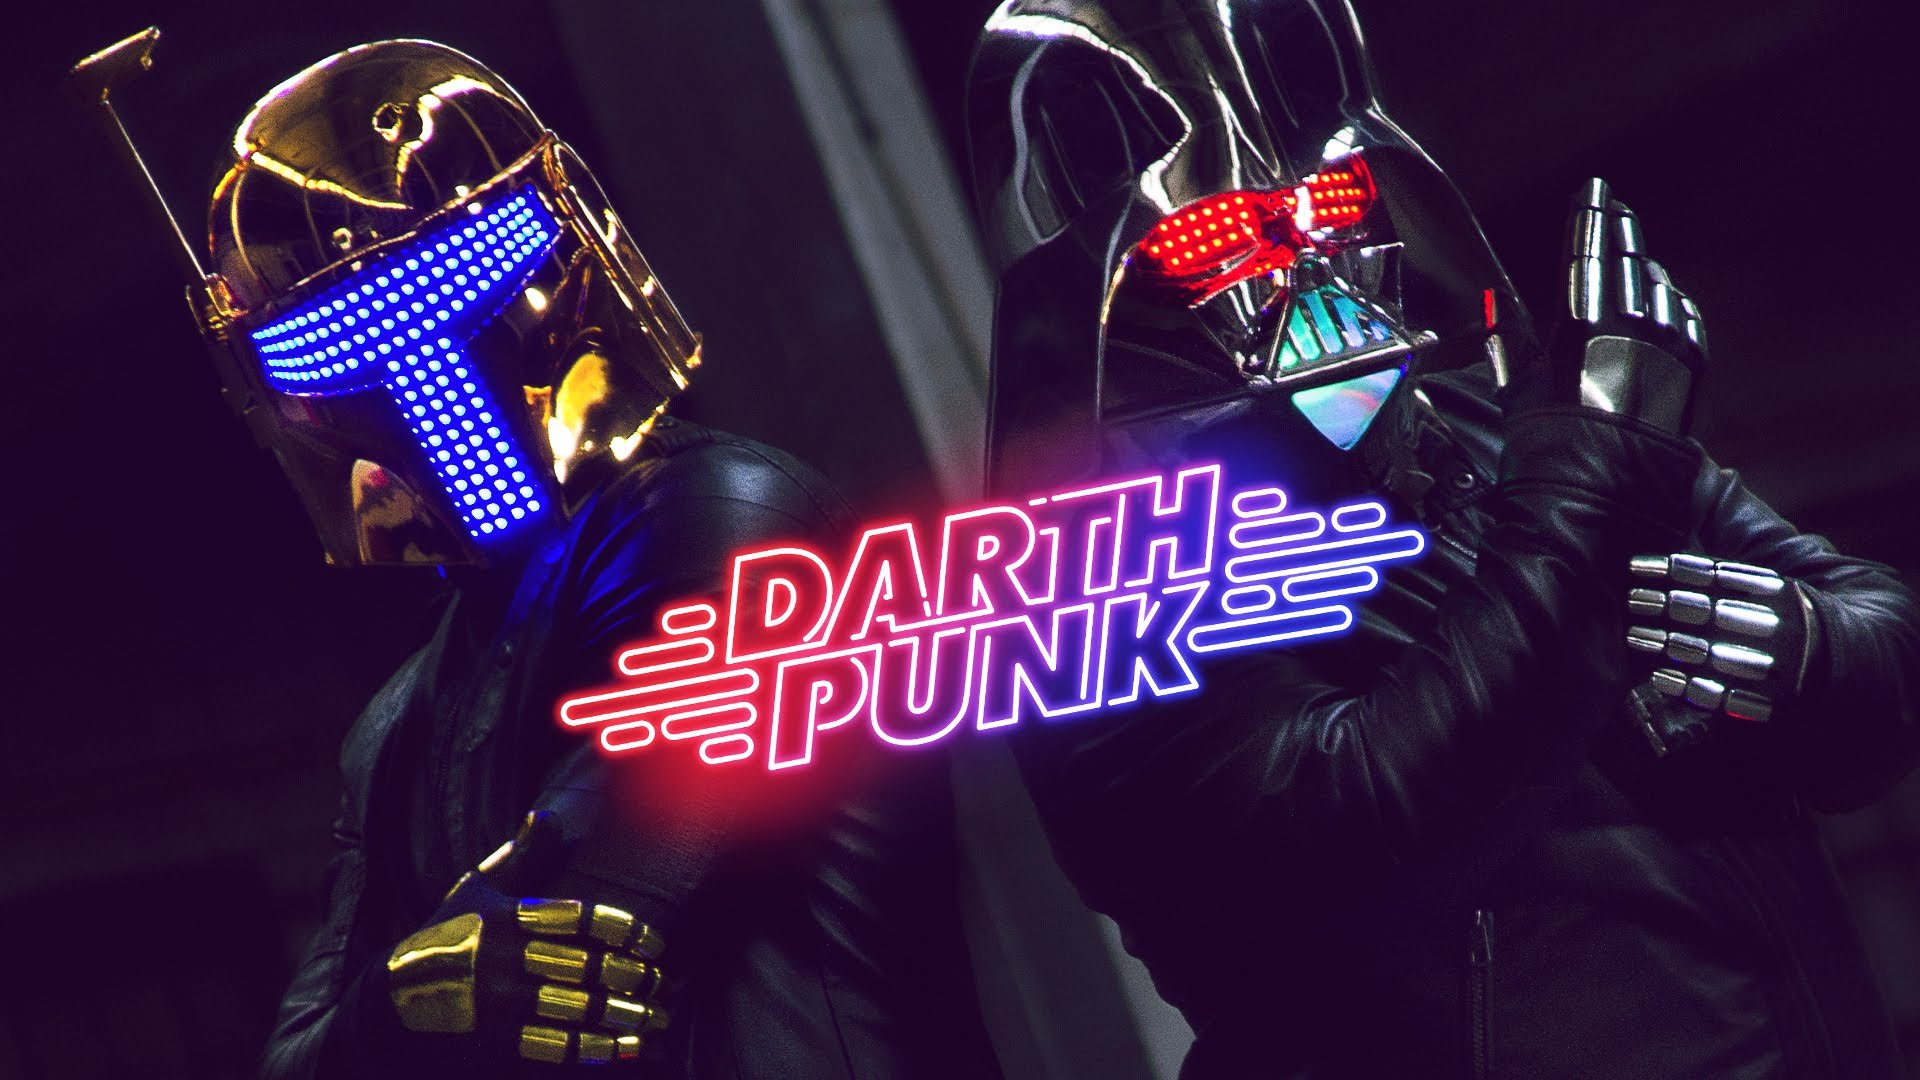 daft, Punk, Dubstep, Electro, House, Dance, Disco, Electronic, Robot, Cyborg, Poster, Darth, Star, Wars Wallpaper